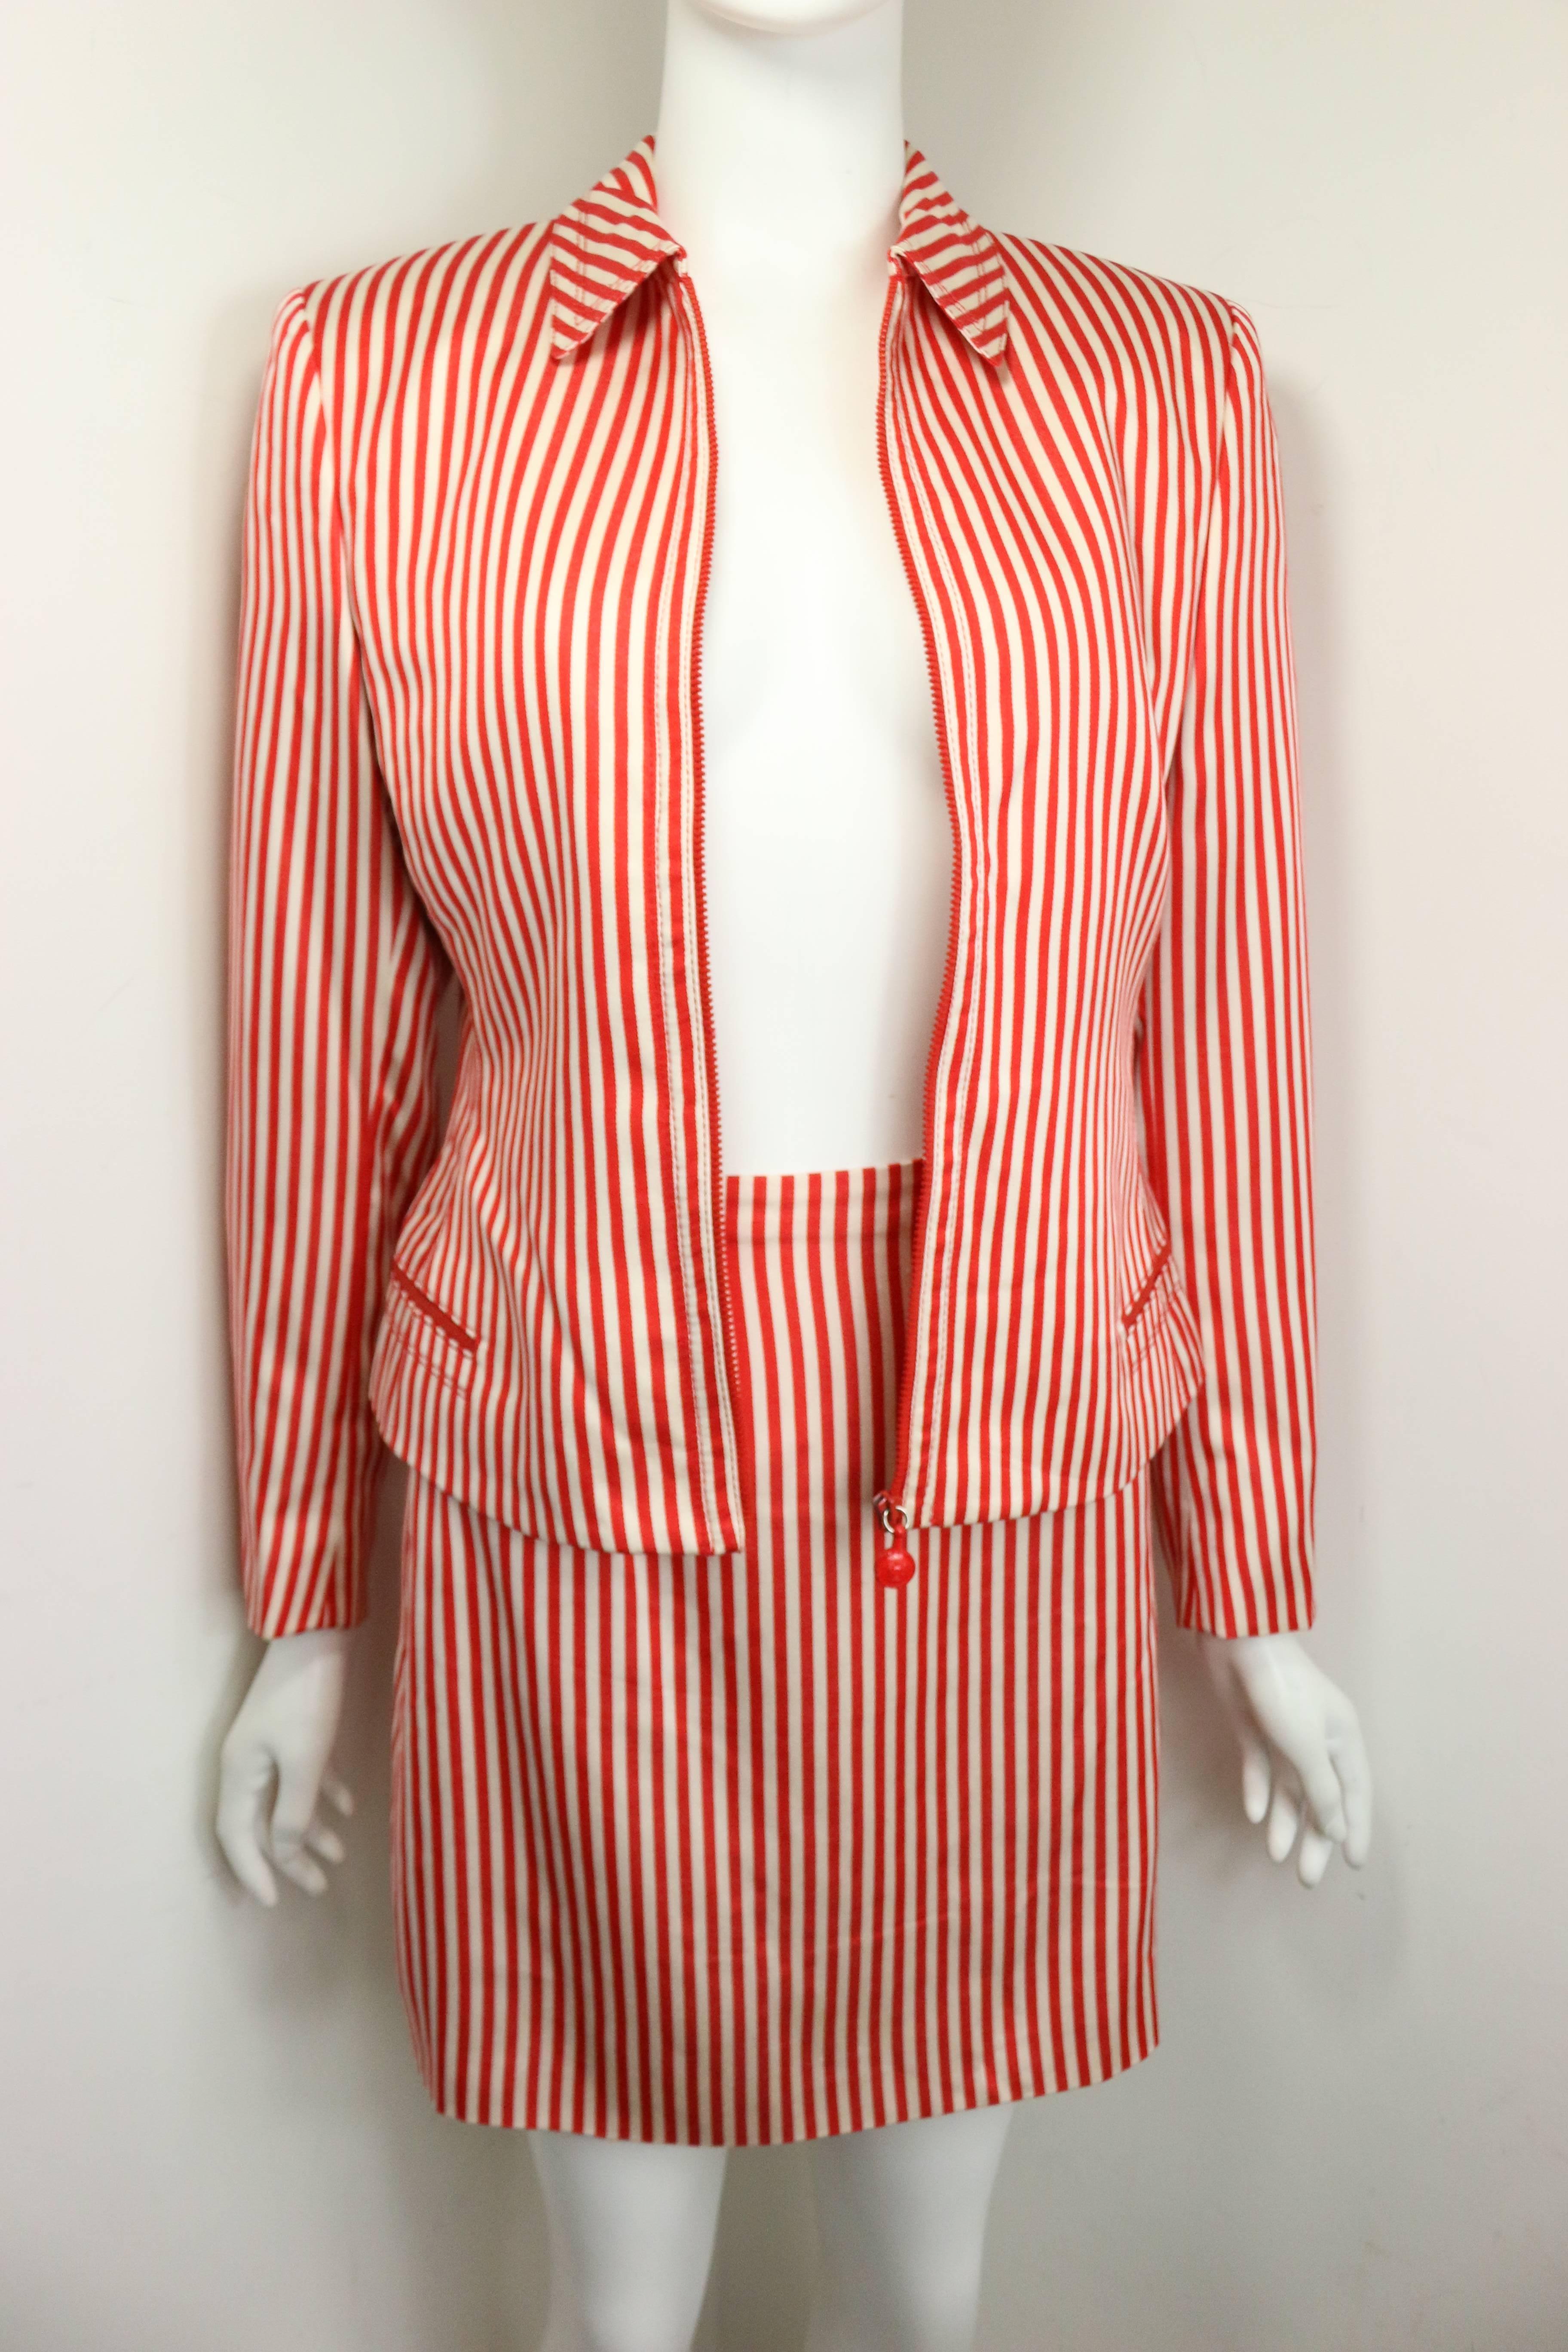 red and white striped blazer